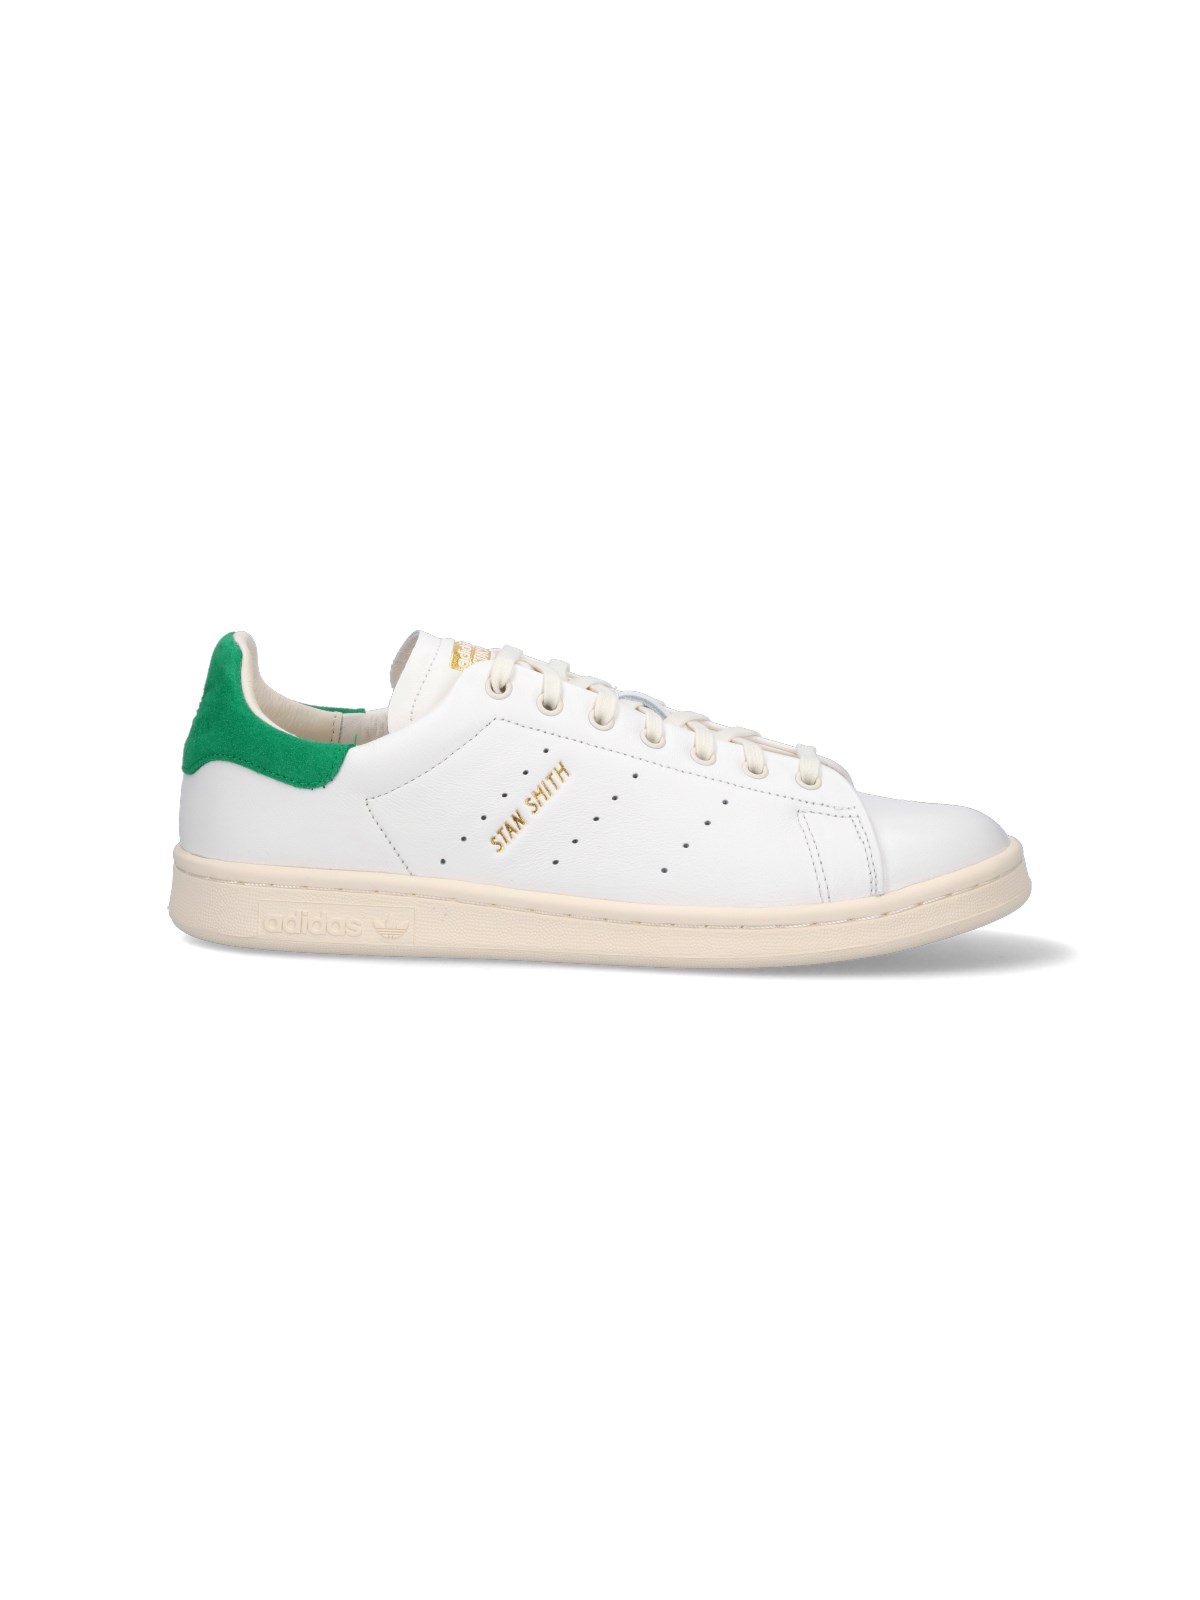 Adidas Originals Stan Smith Lux Sneakers In Cloud White/cream White/green